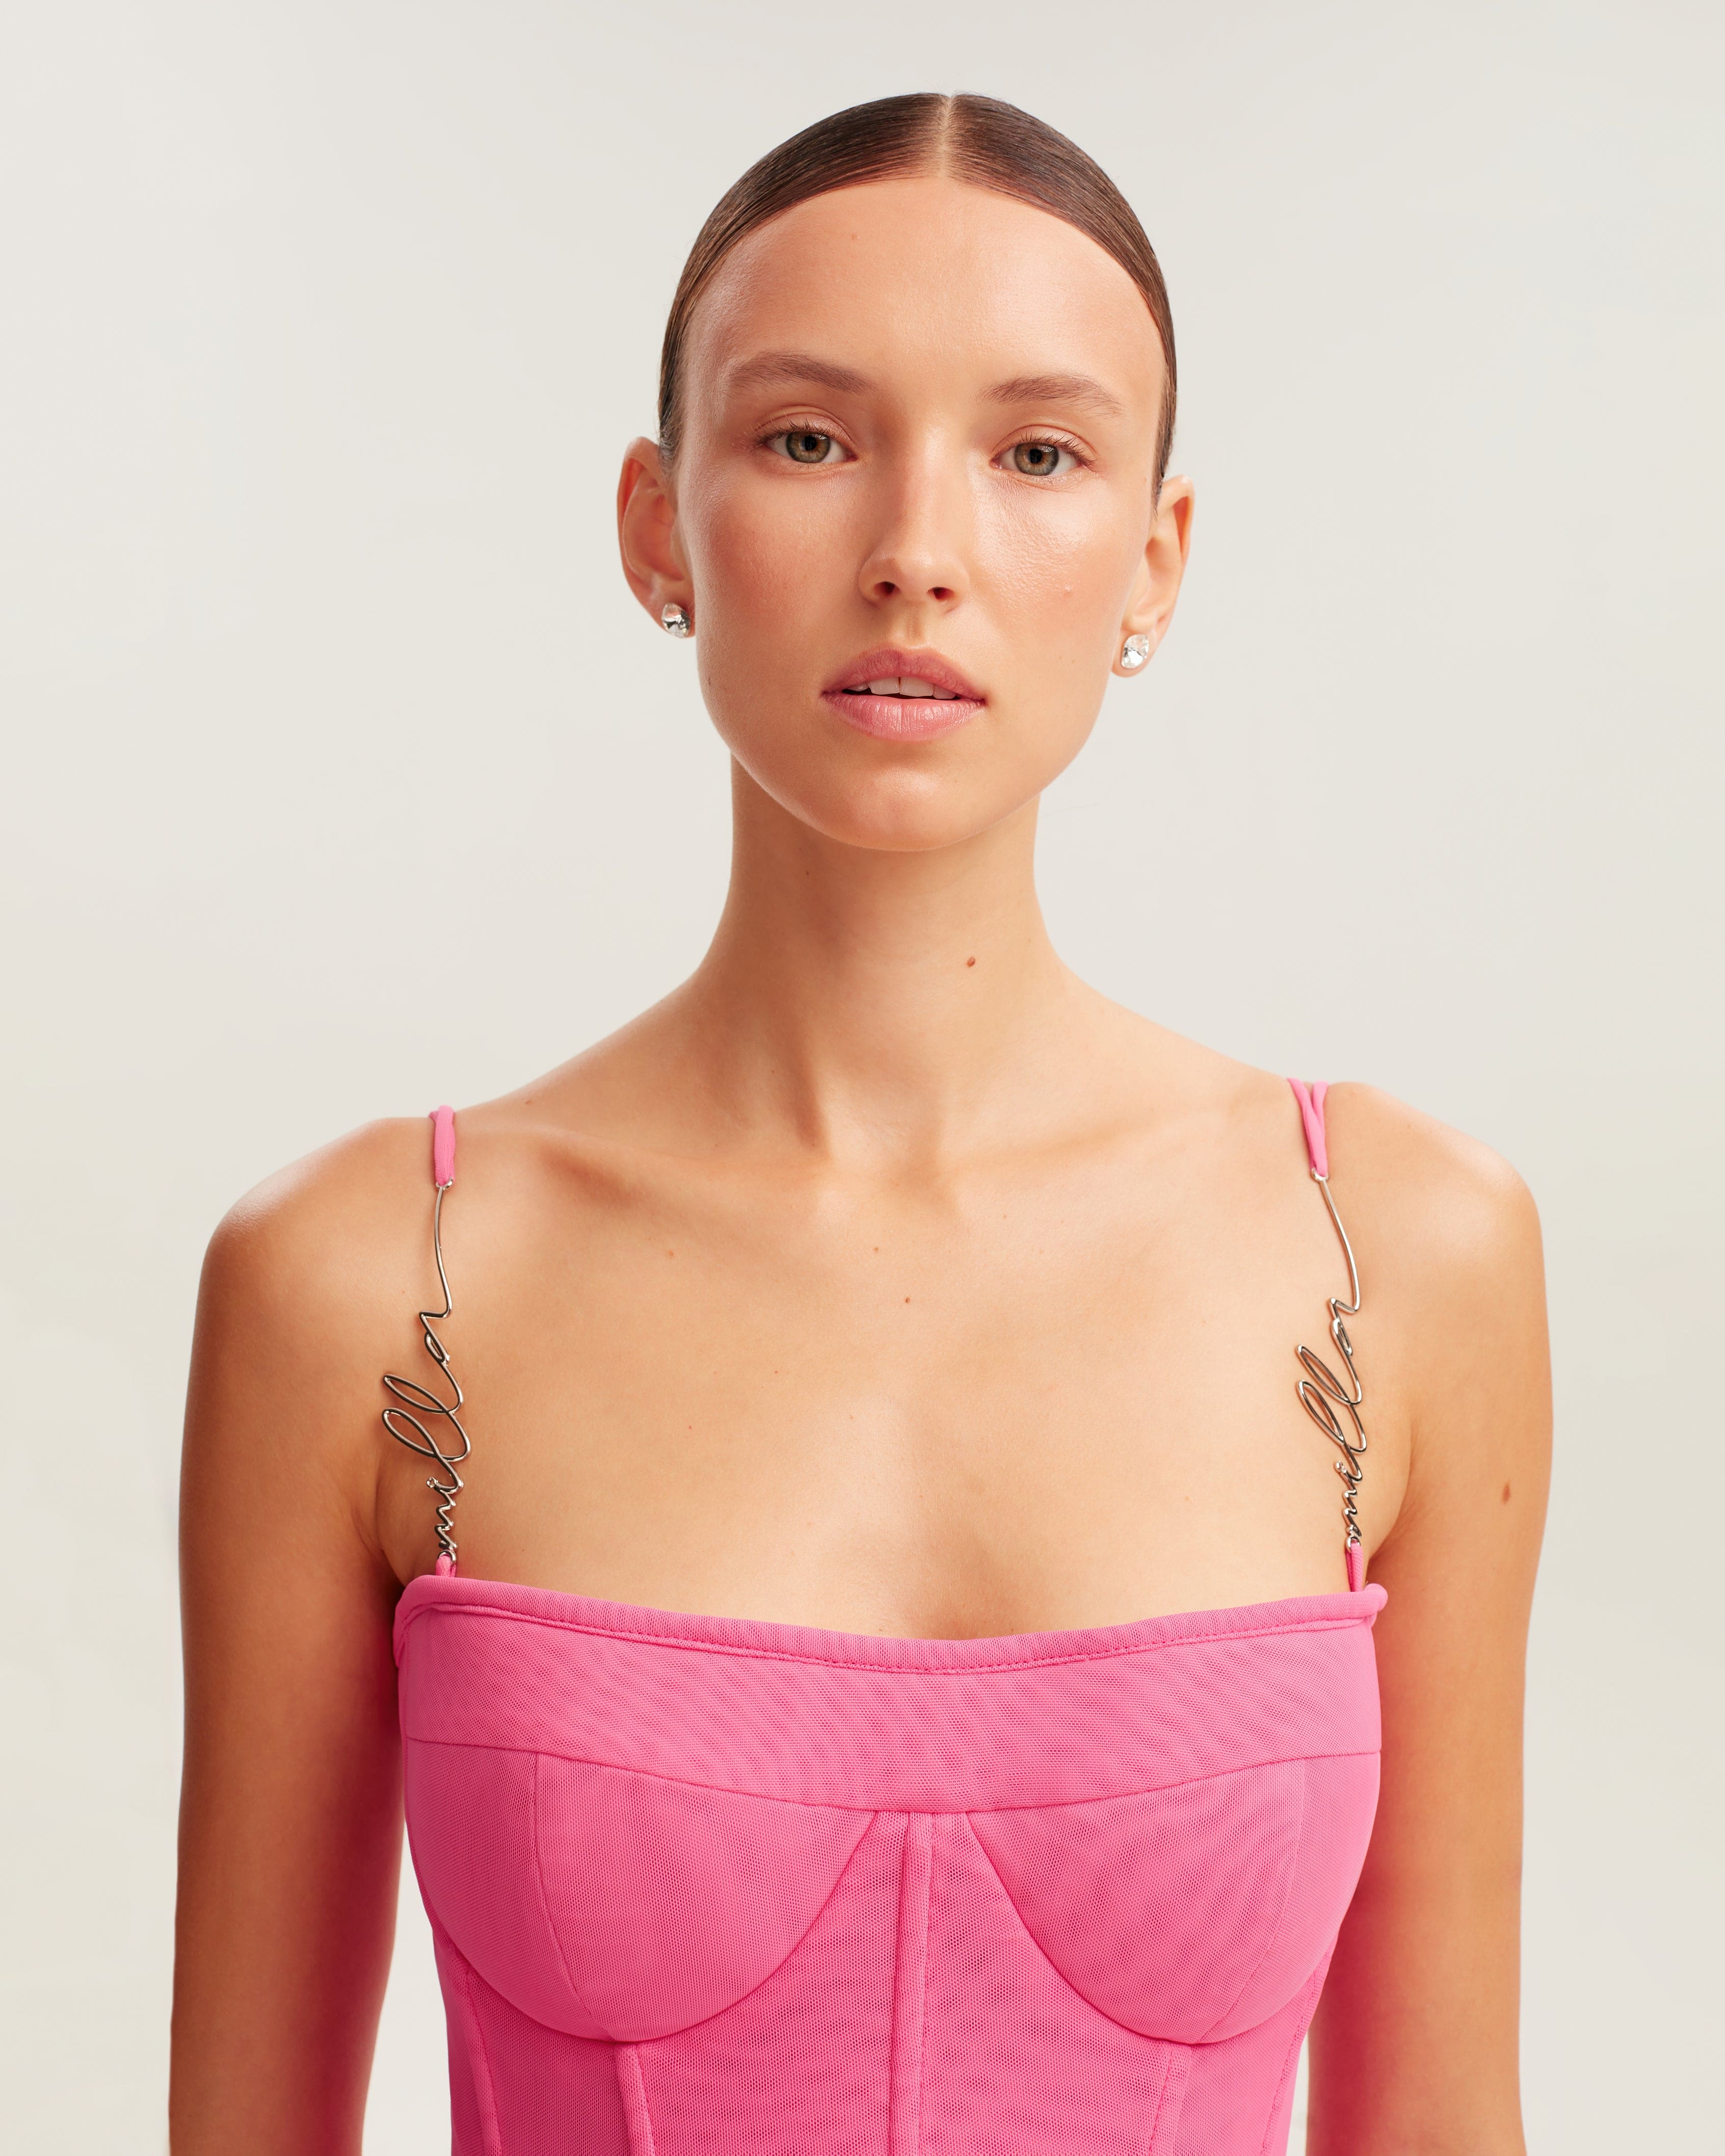 Barbie pink spaghetti strap pleated maxi dress, Garden of Eden